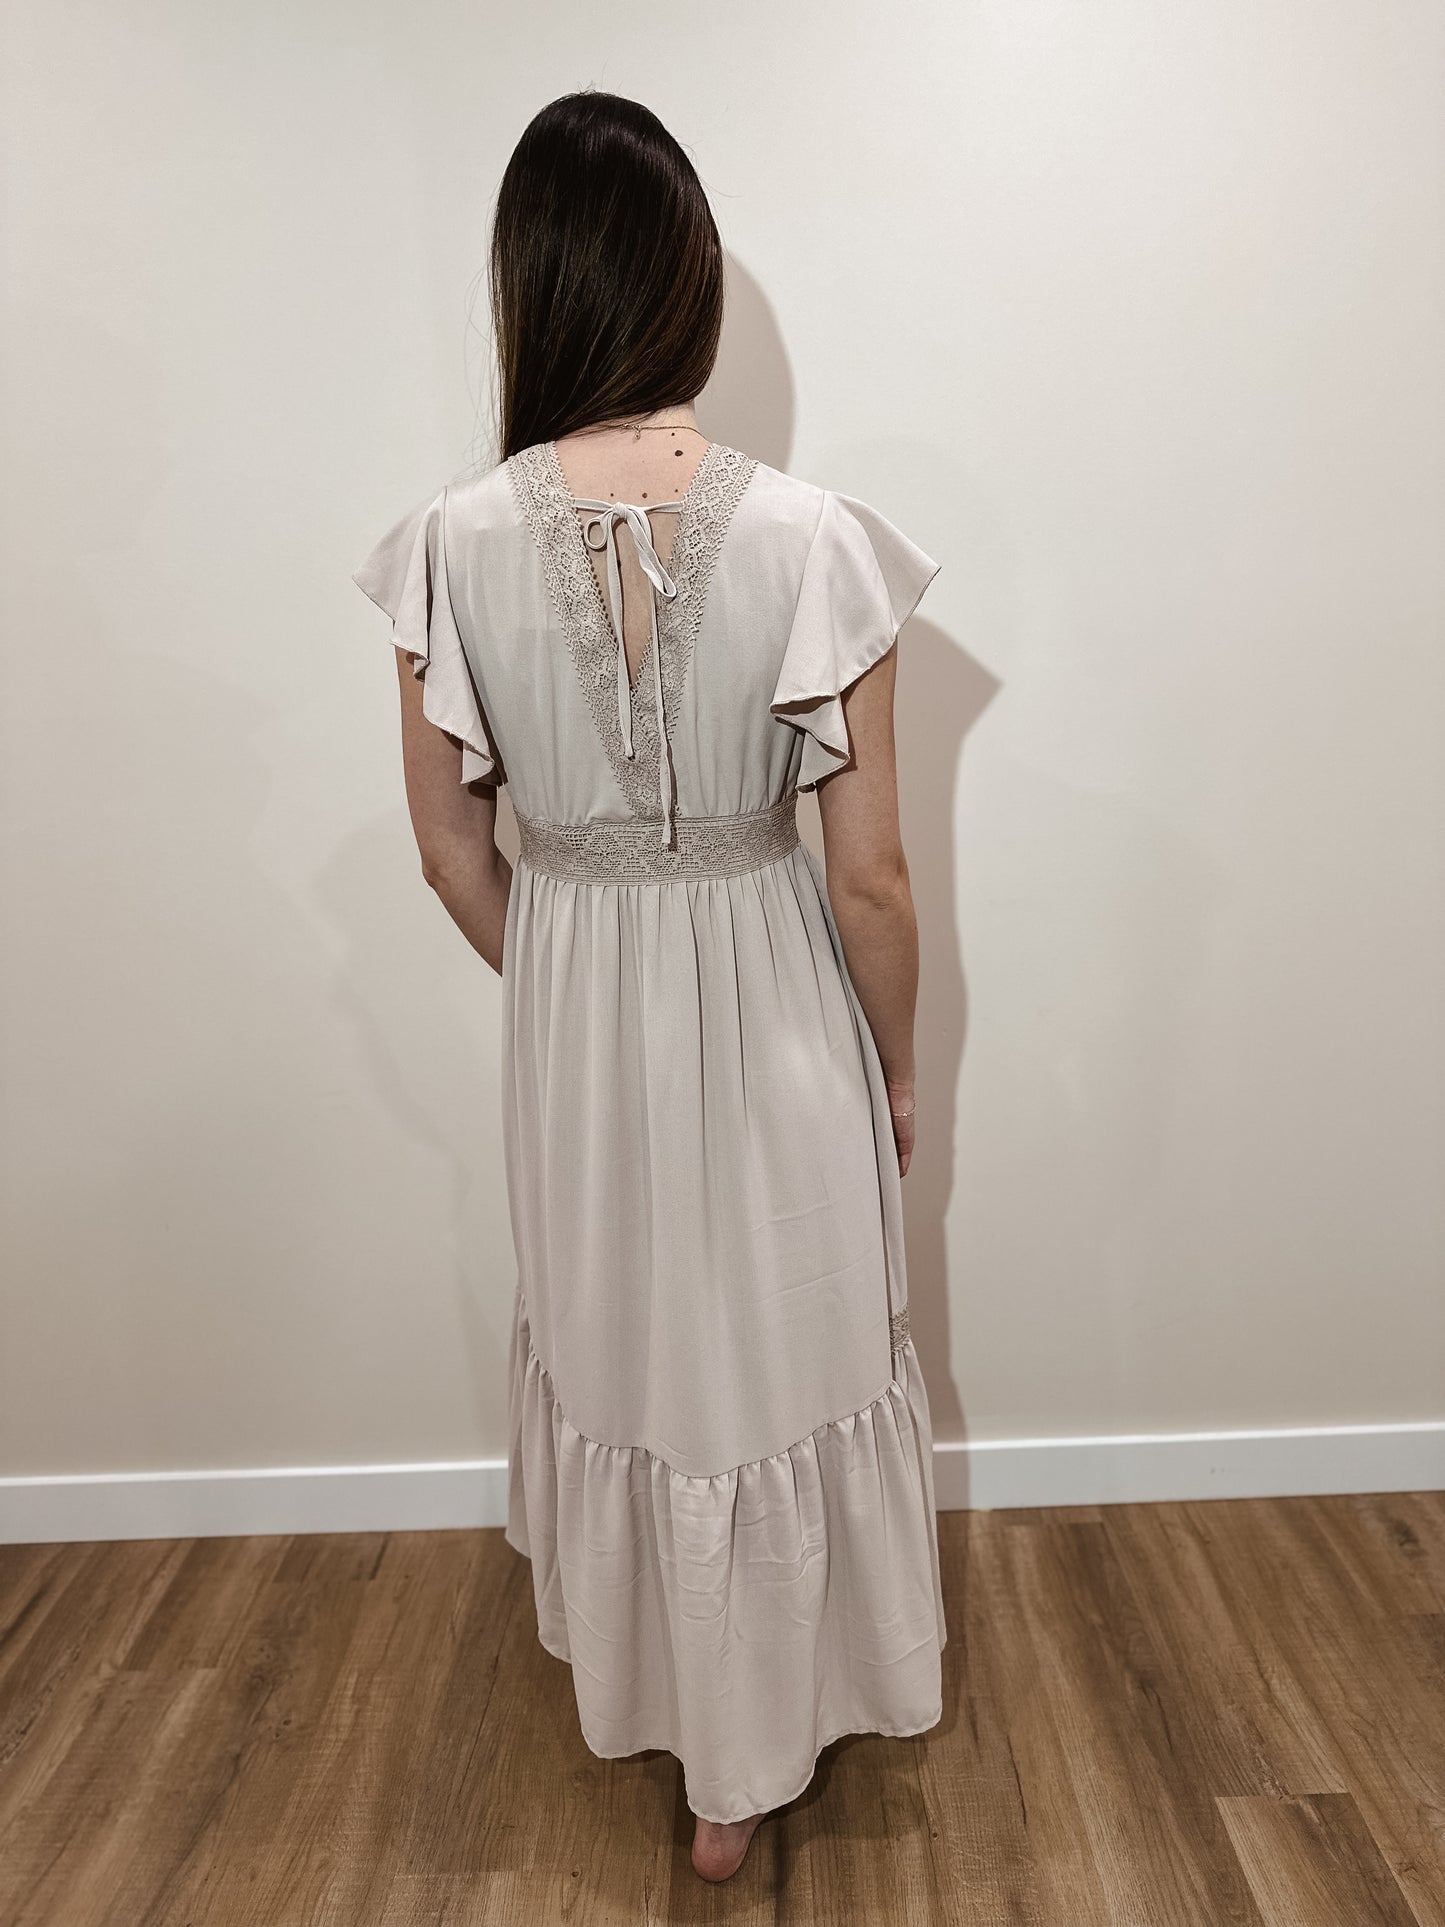 The Short Sleeve Lace Maxi Dress